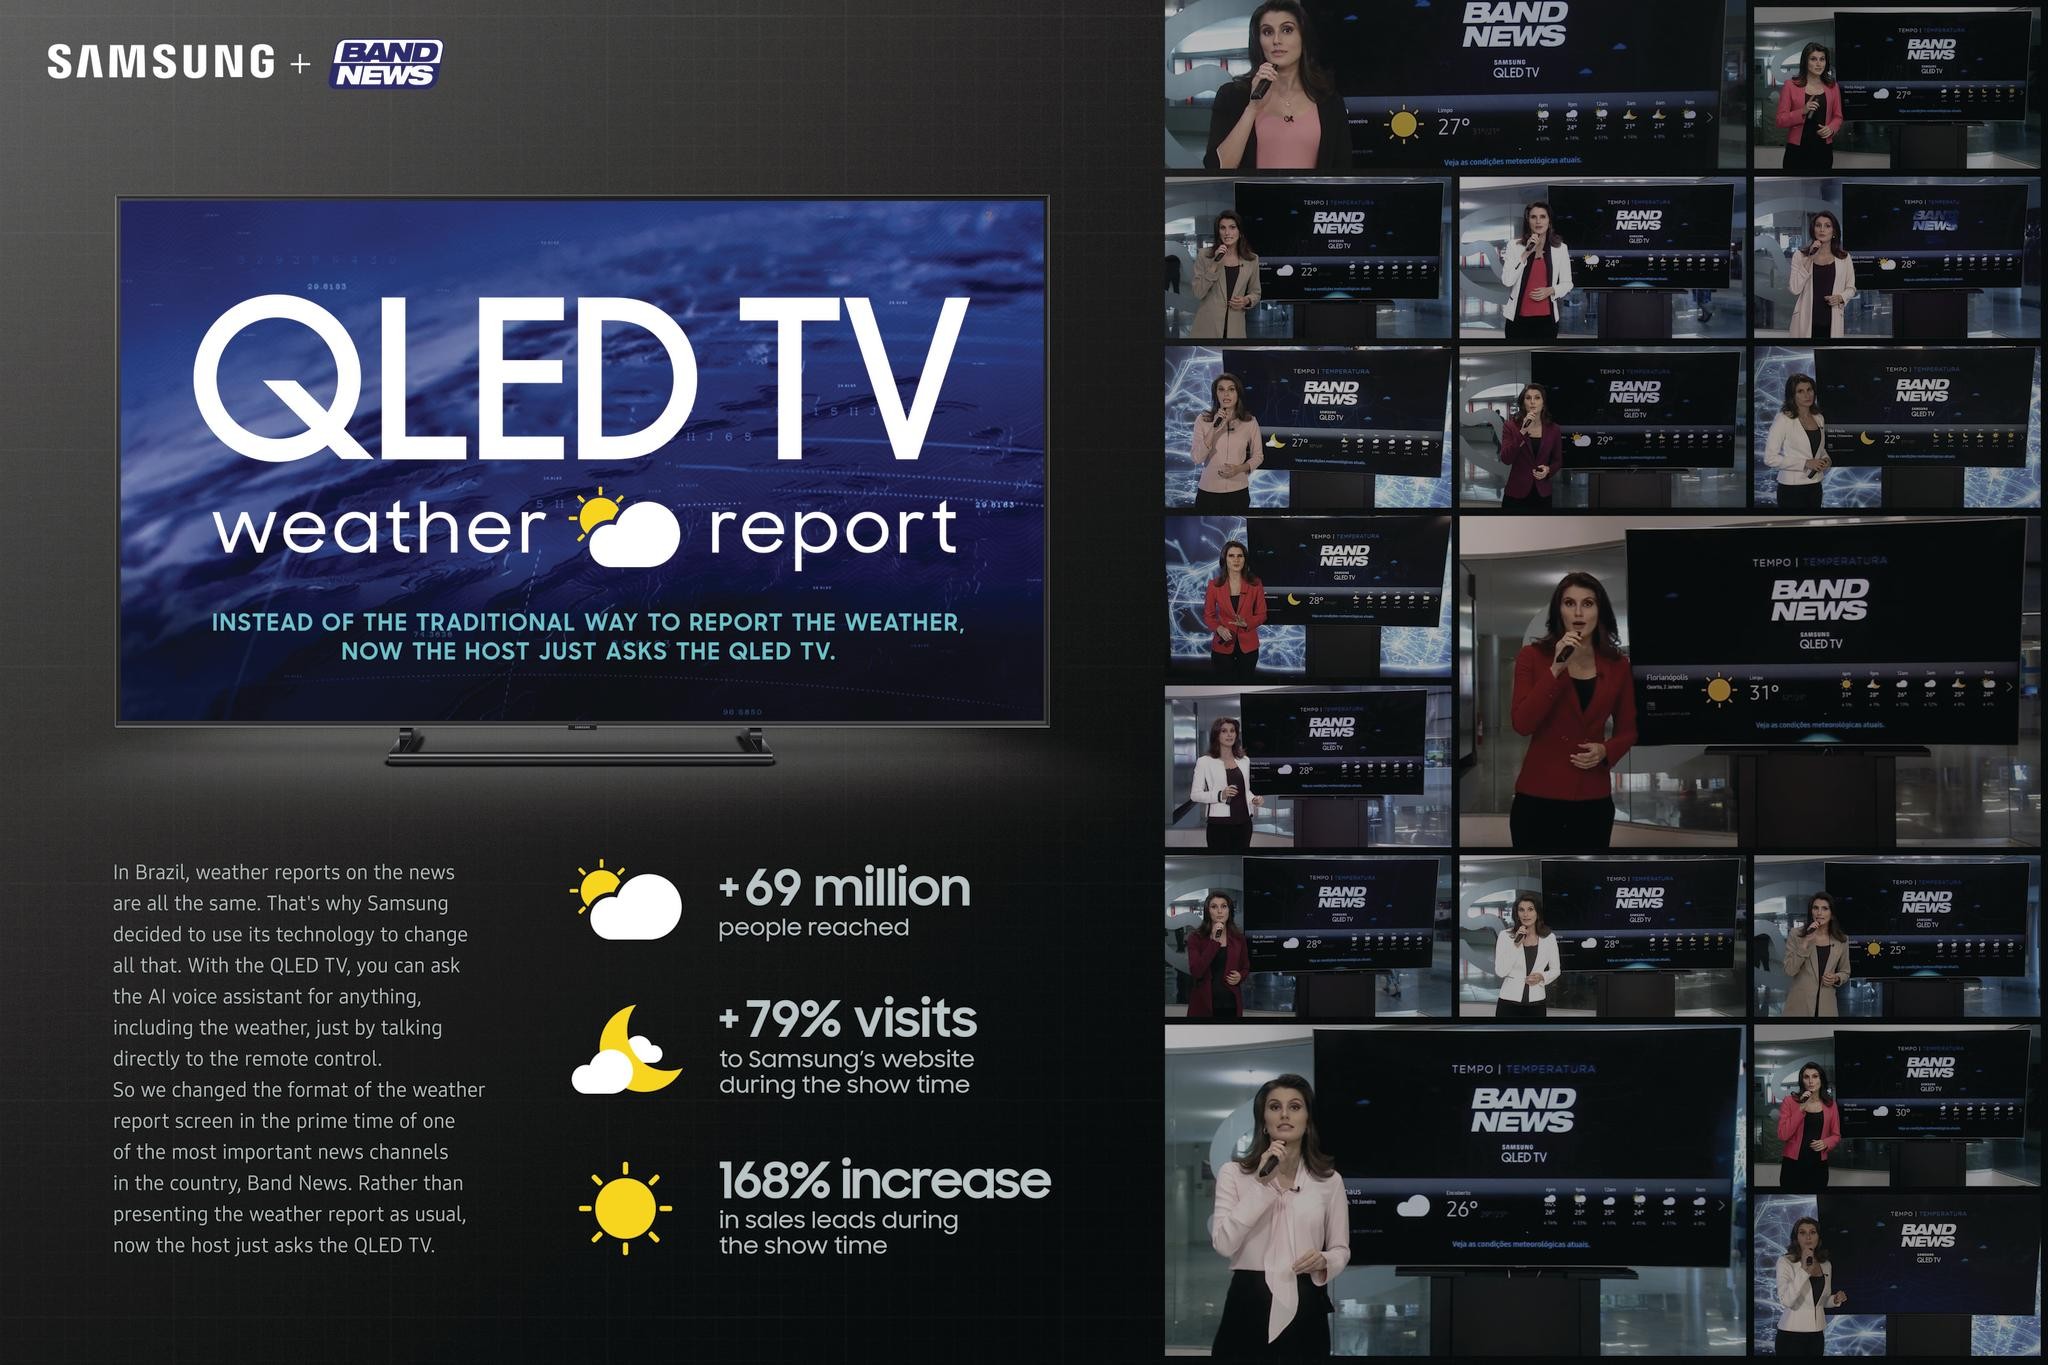 QLED TV Weather Report